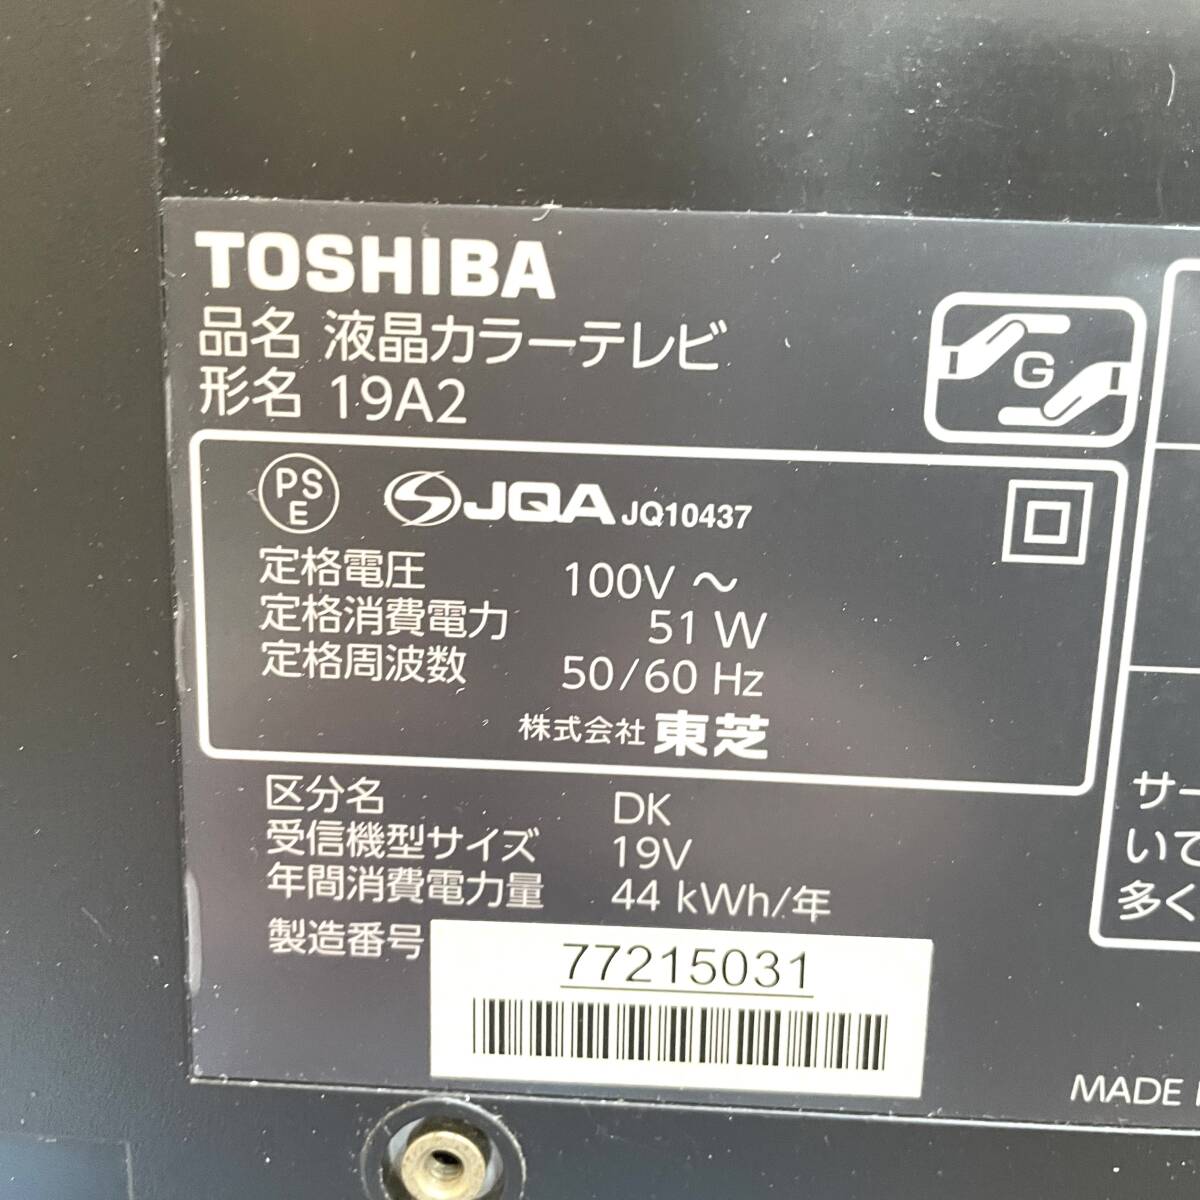 TOSHIBA REGZA 液晶テレビ 19V型 19A2 レグザ 東芝 液晶カラーテレビ リモコン無 【2011年製】の画像9